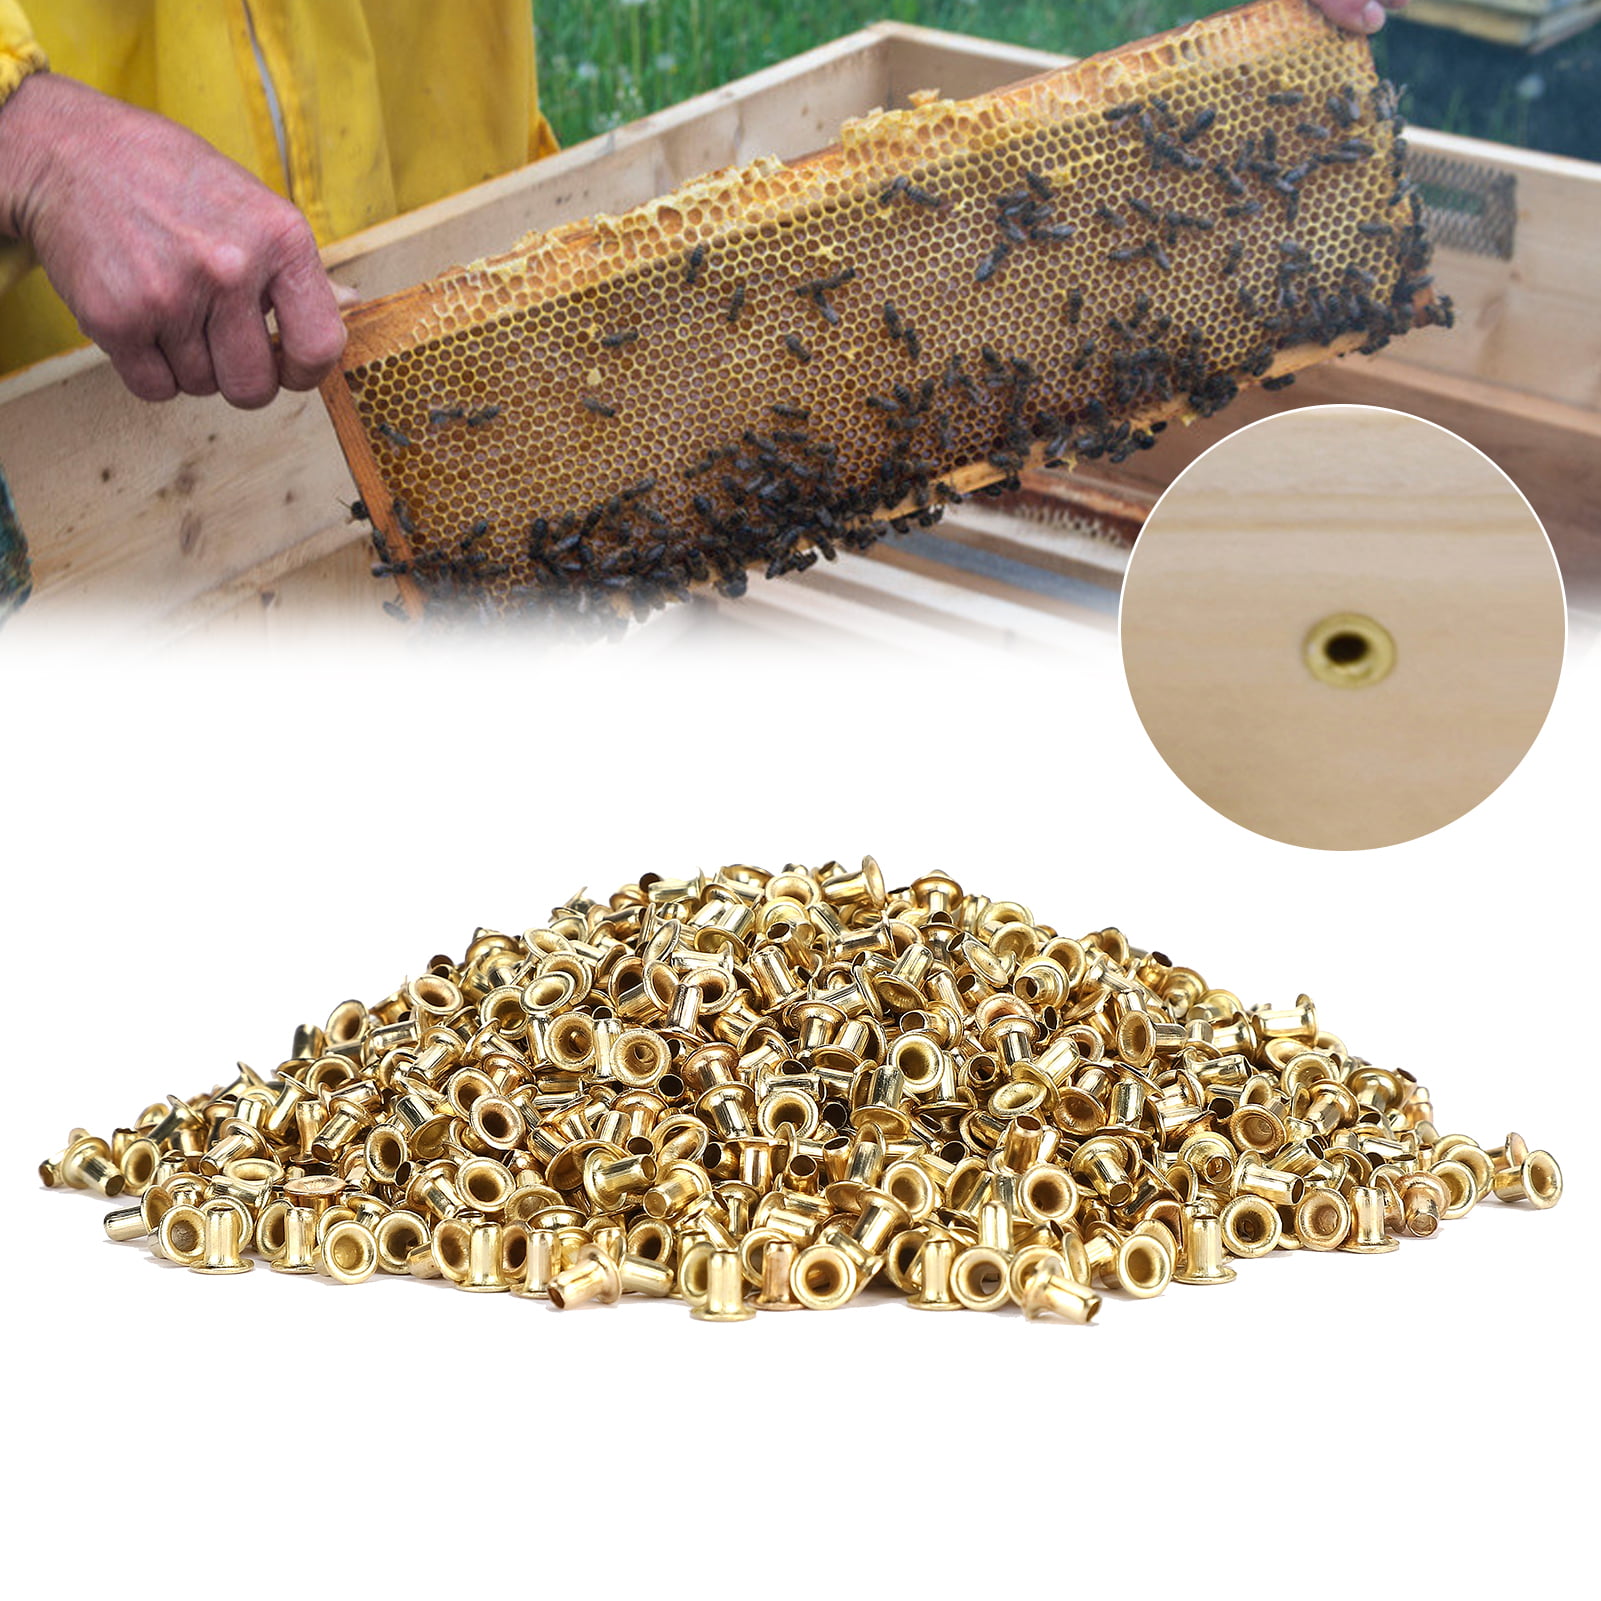 Bee Beekeeping Copper Eye Supplies Beehive Tool Gadget Hole Cover Equipment Kit 